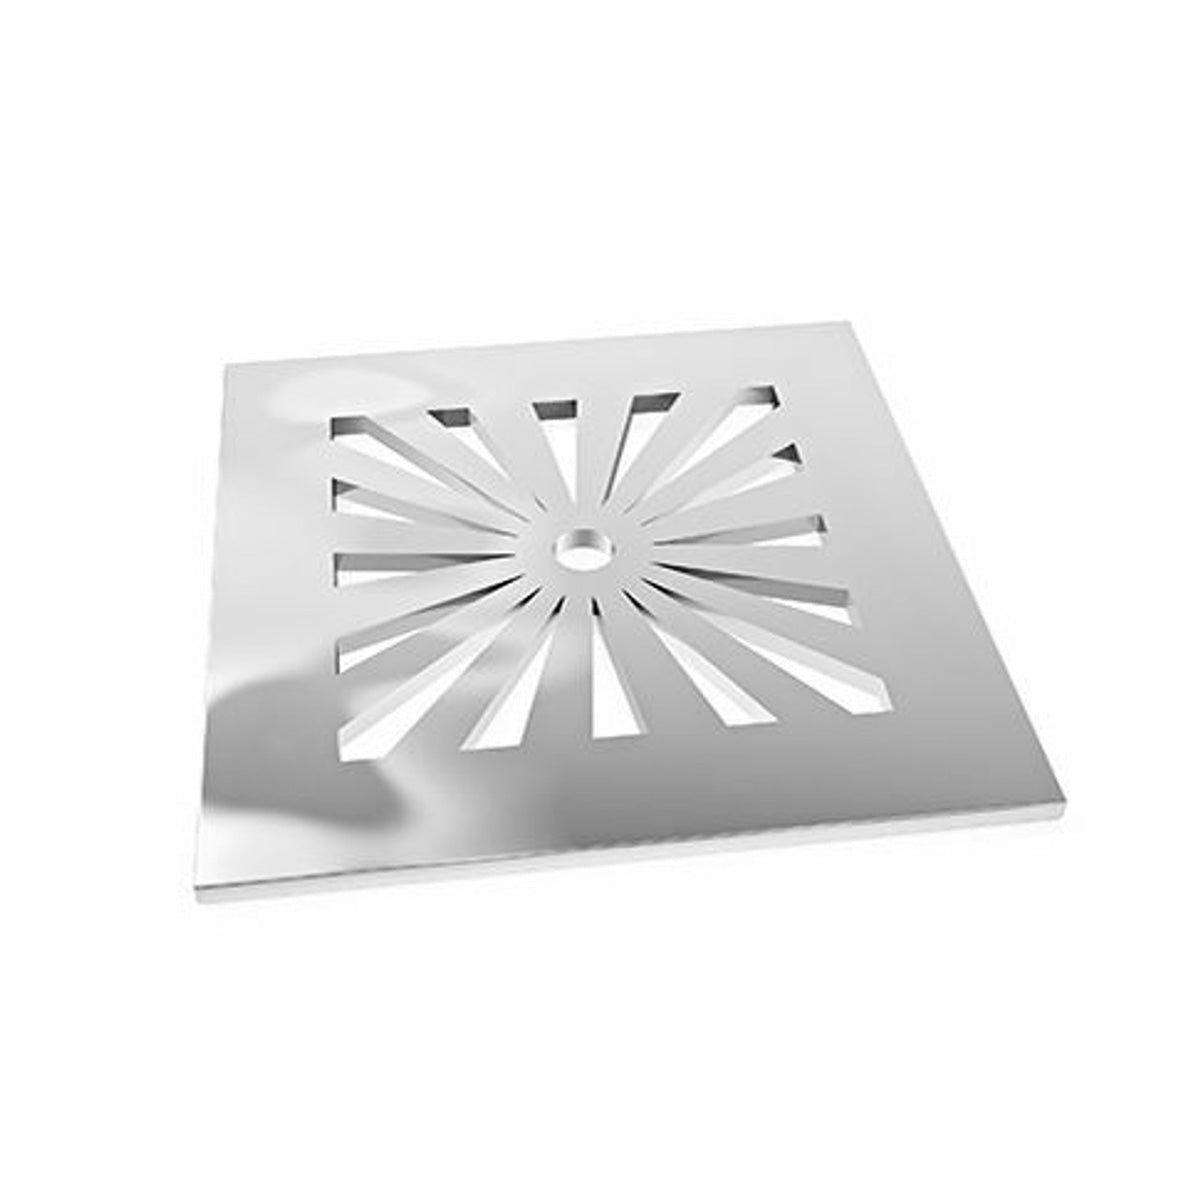 jackoboard aqua flat sol stainless steel grate 120x120mm